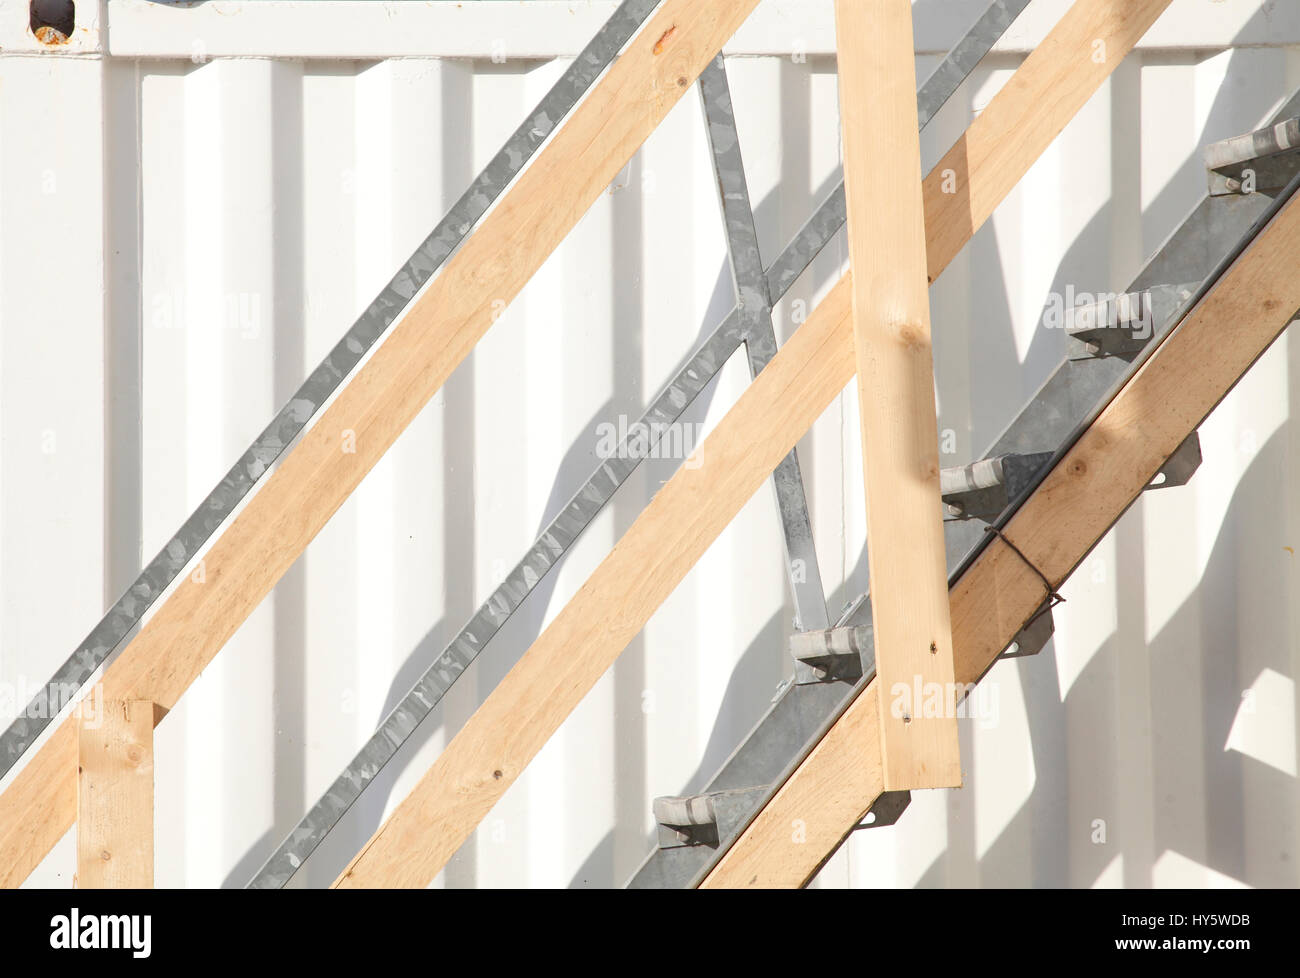 wooden railings, stairway Stock Photo